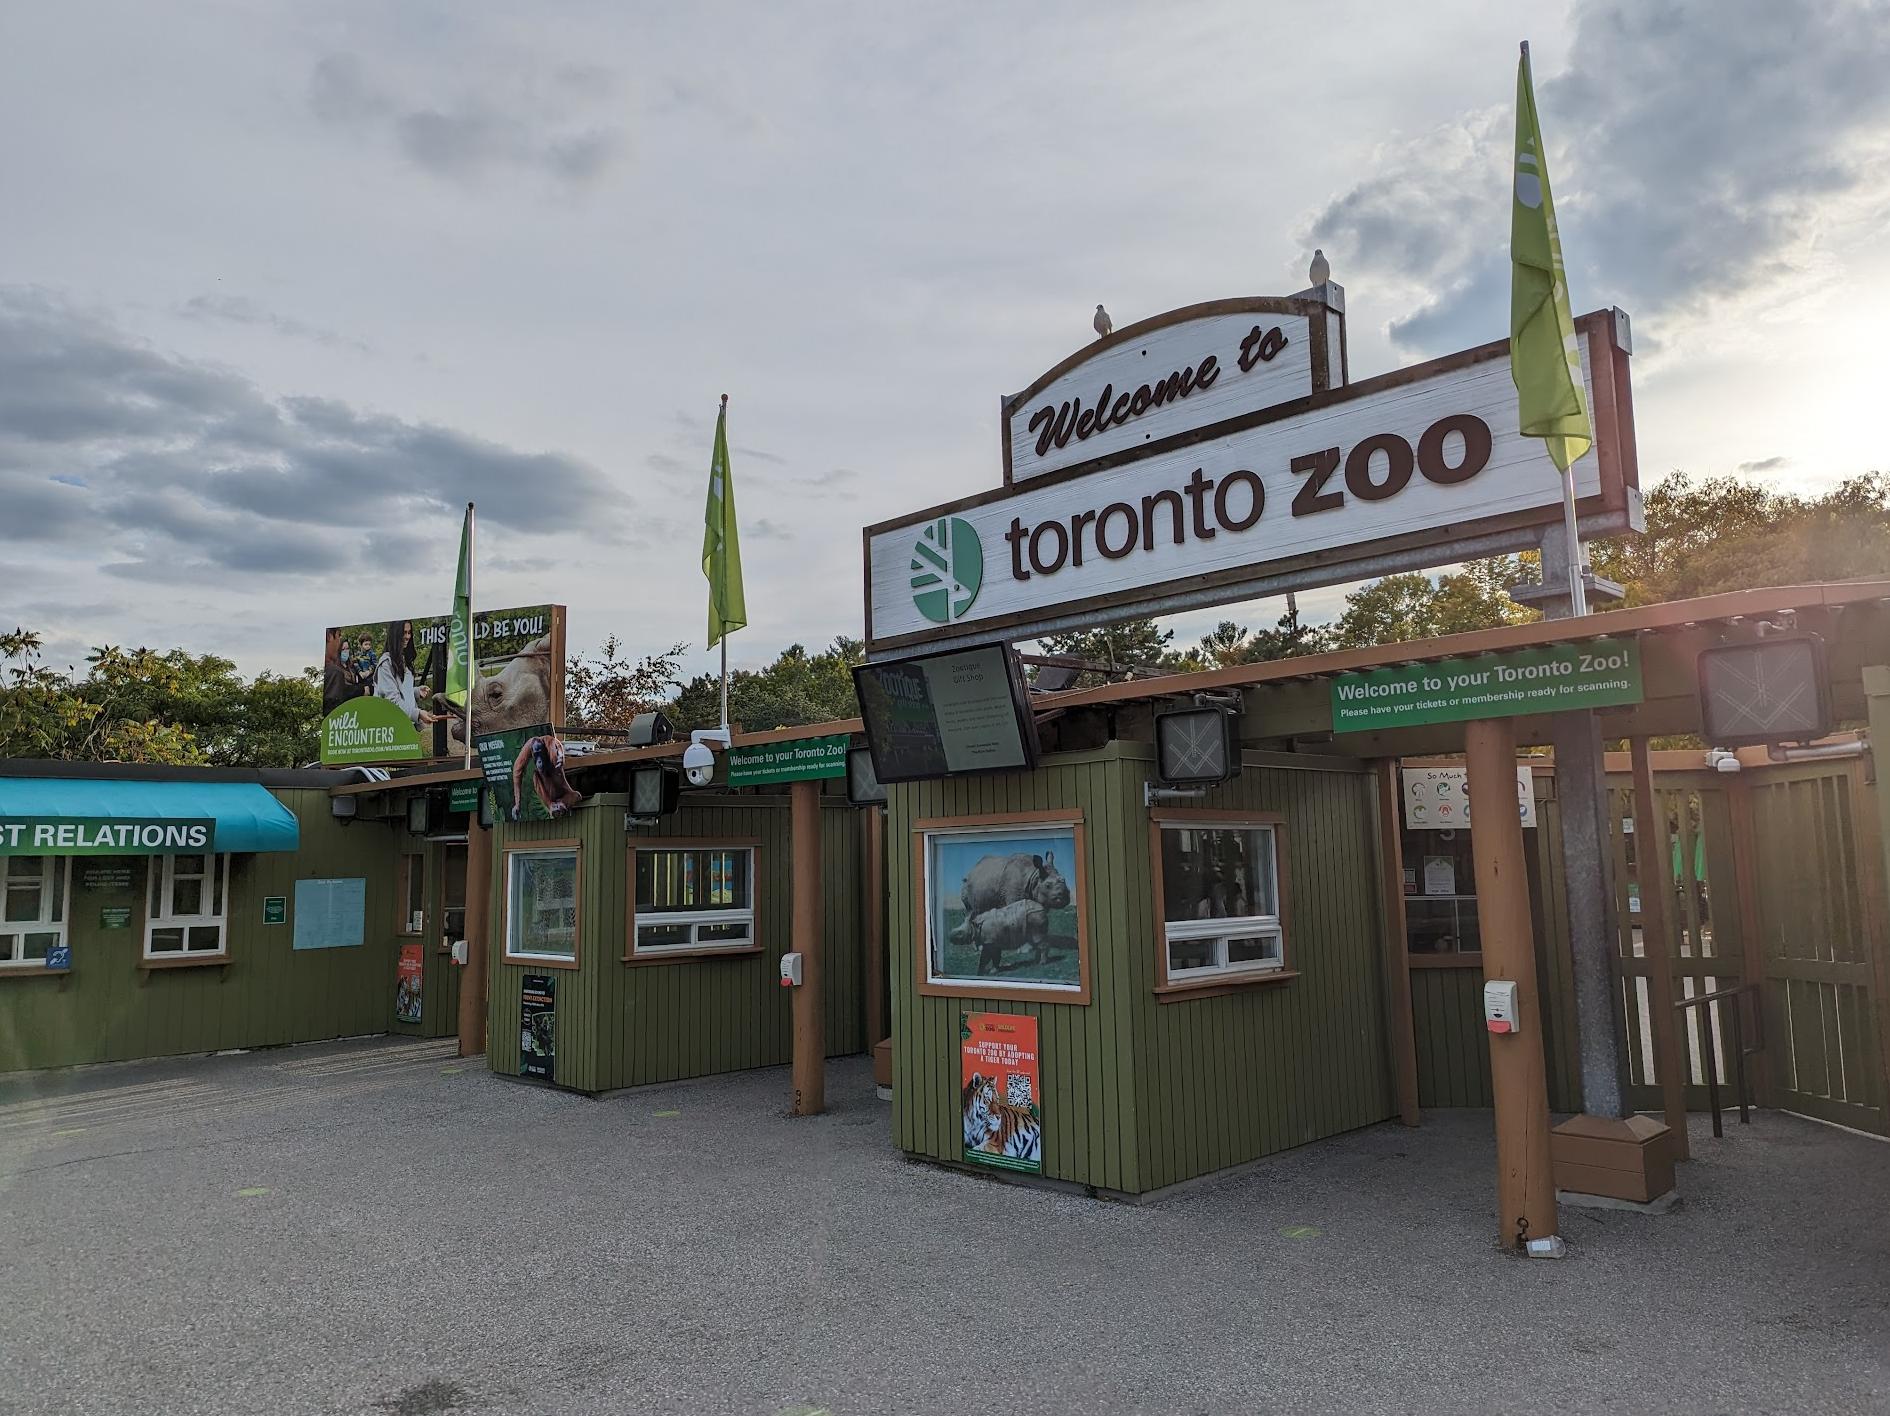 Zoológico de Toronto